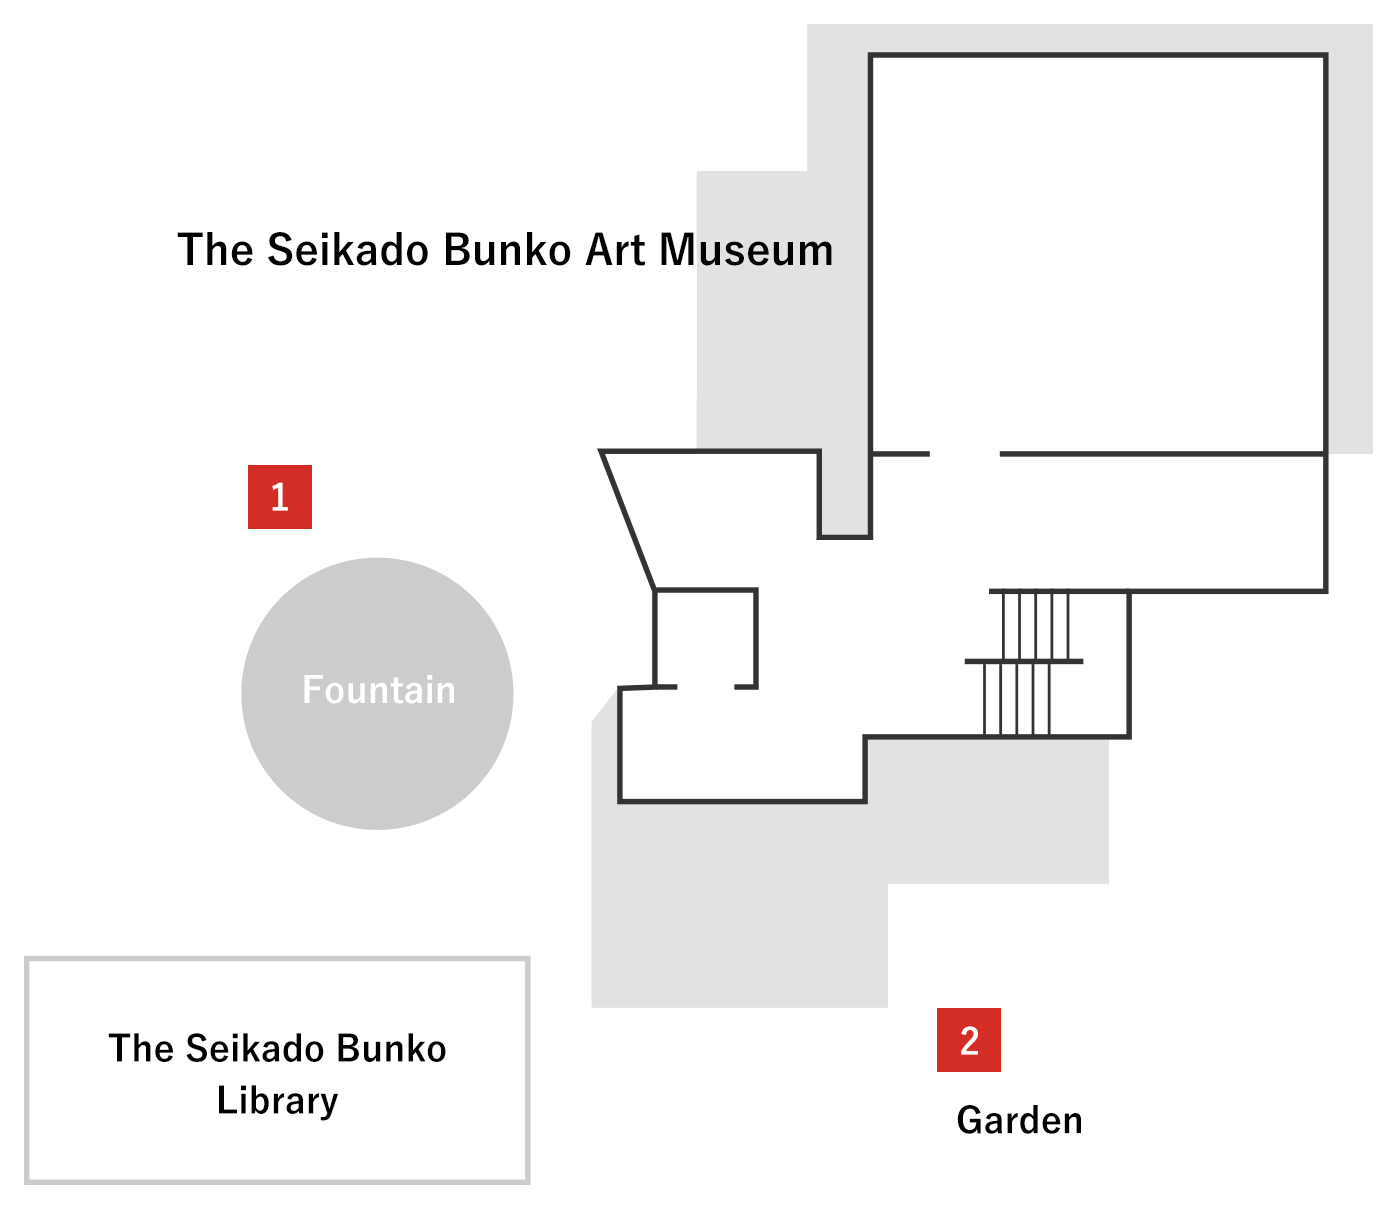 The Seikado Bunko Library and the Seikado Bunko Art Museum